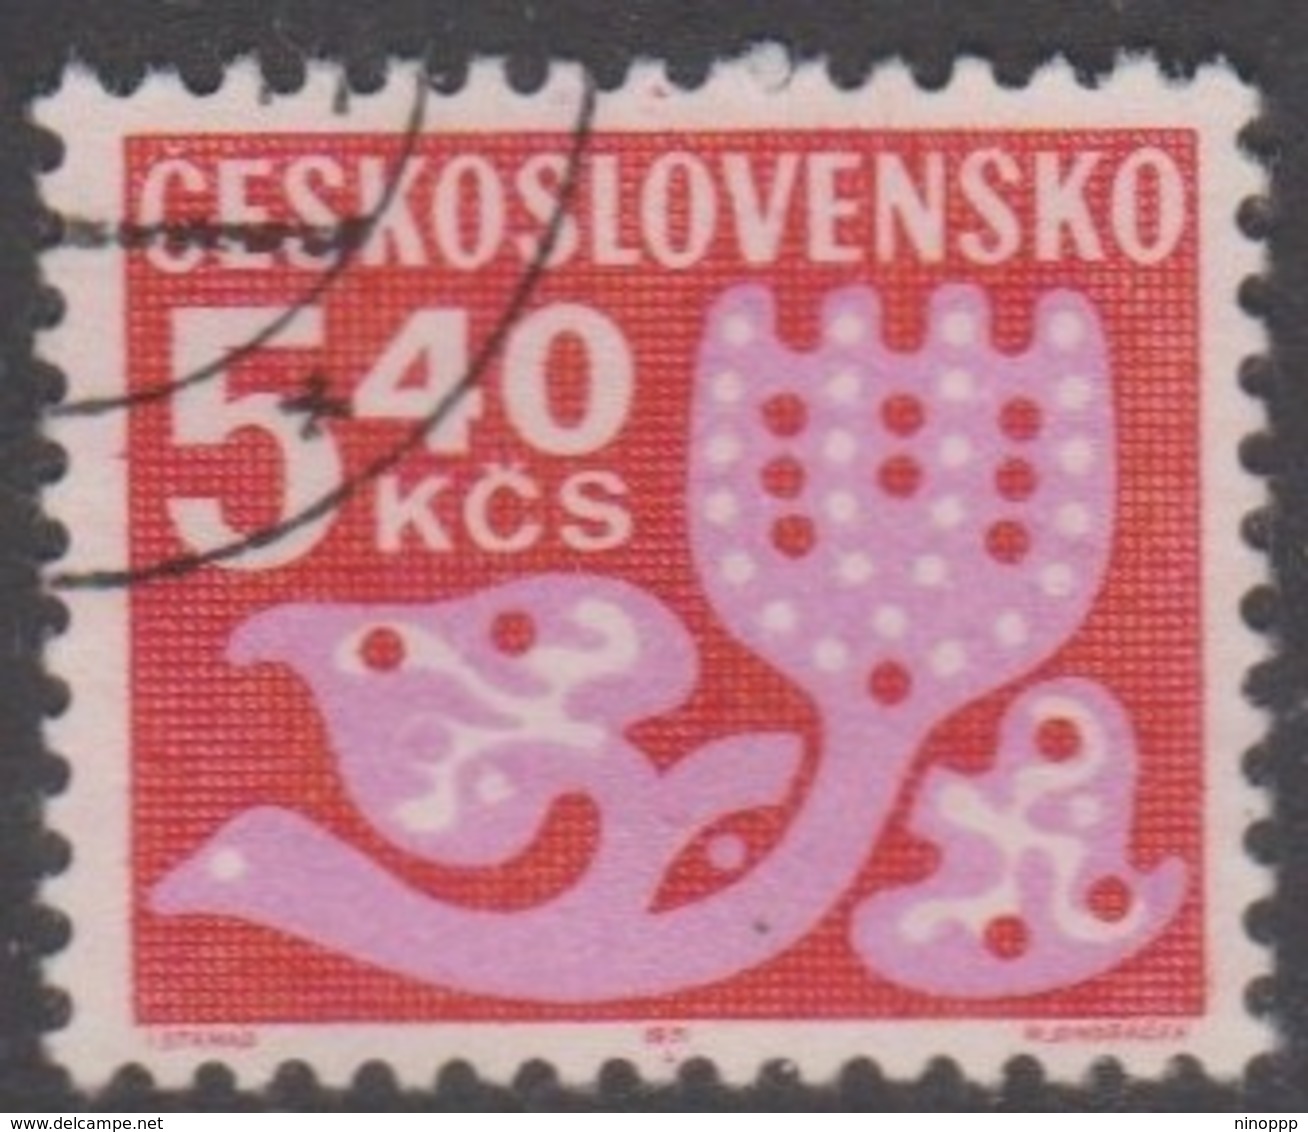 Czechoslovakia Scott J105 1972 Postage Due 5.40 Kcs, Used - Used Stamps